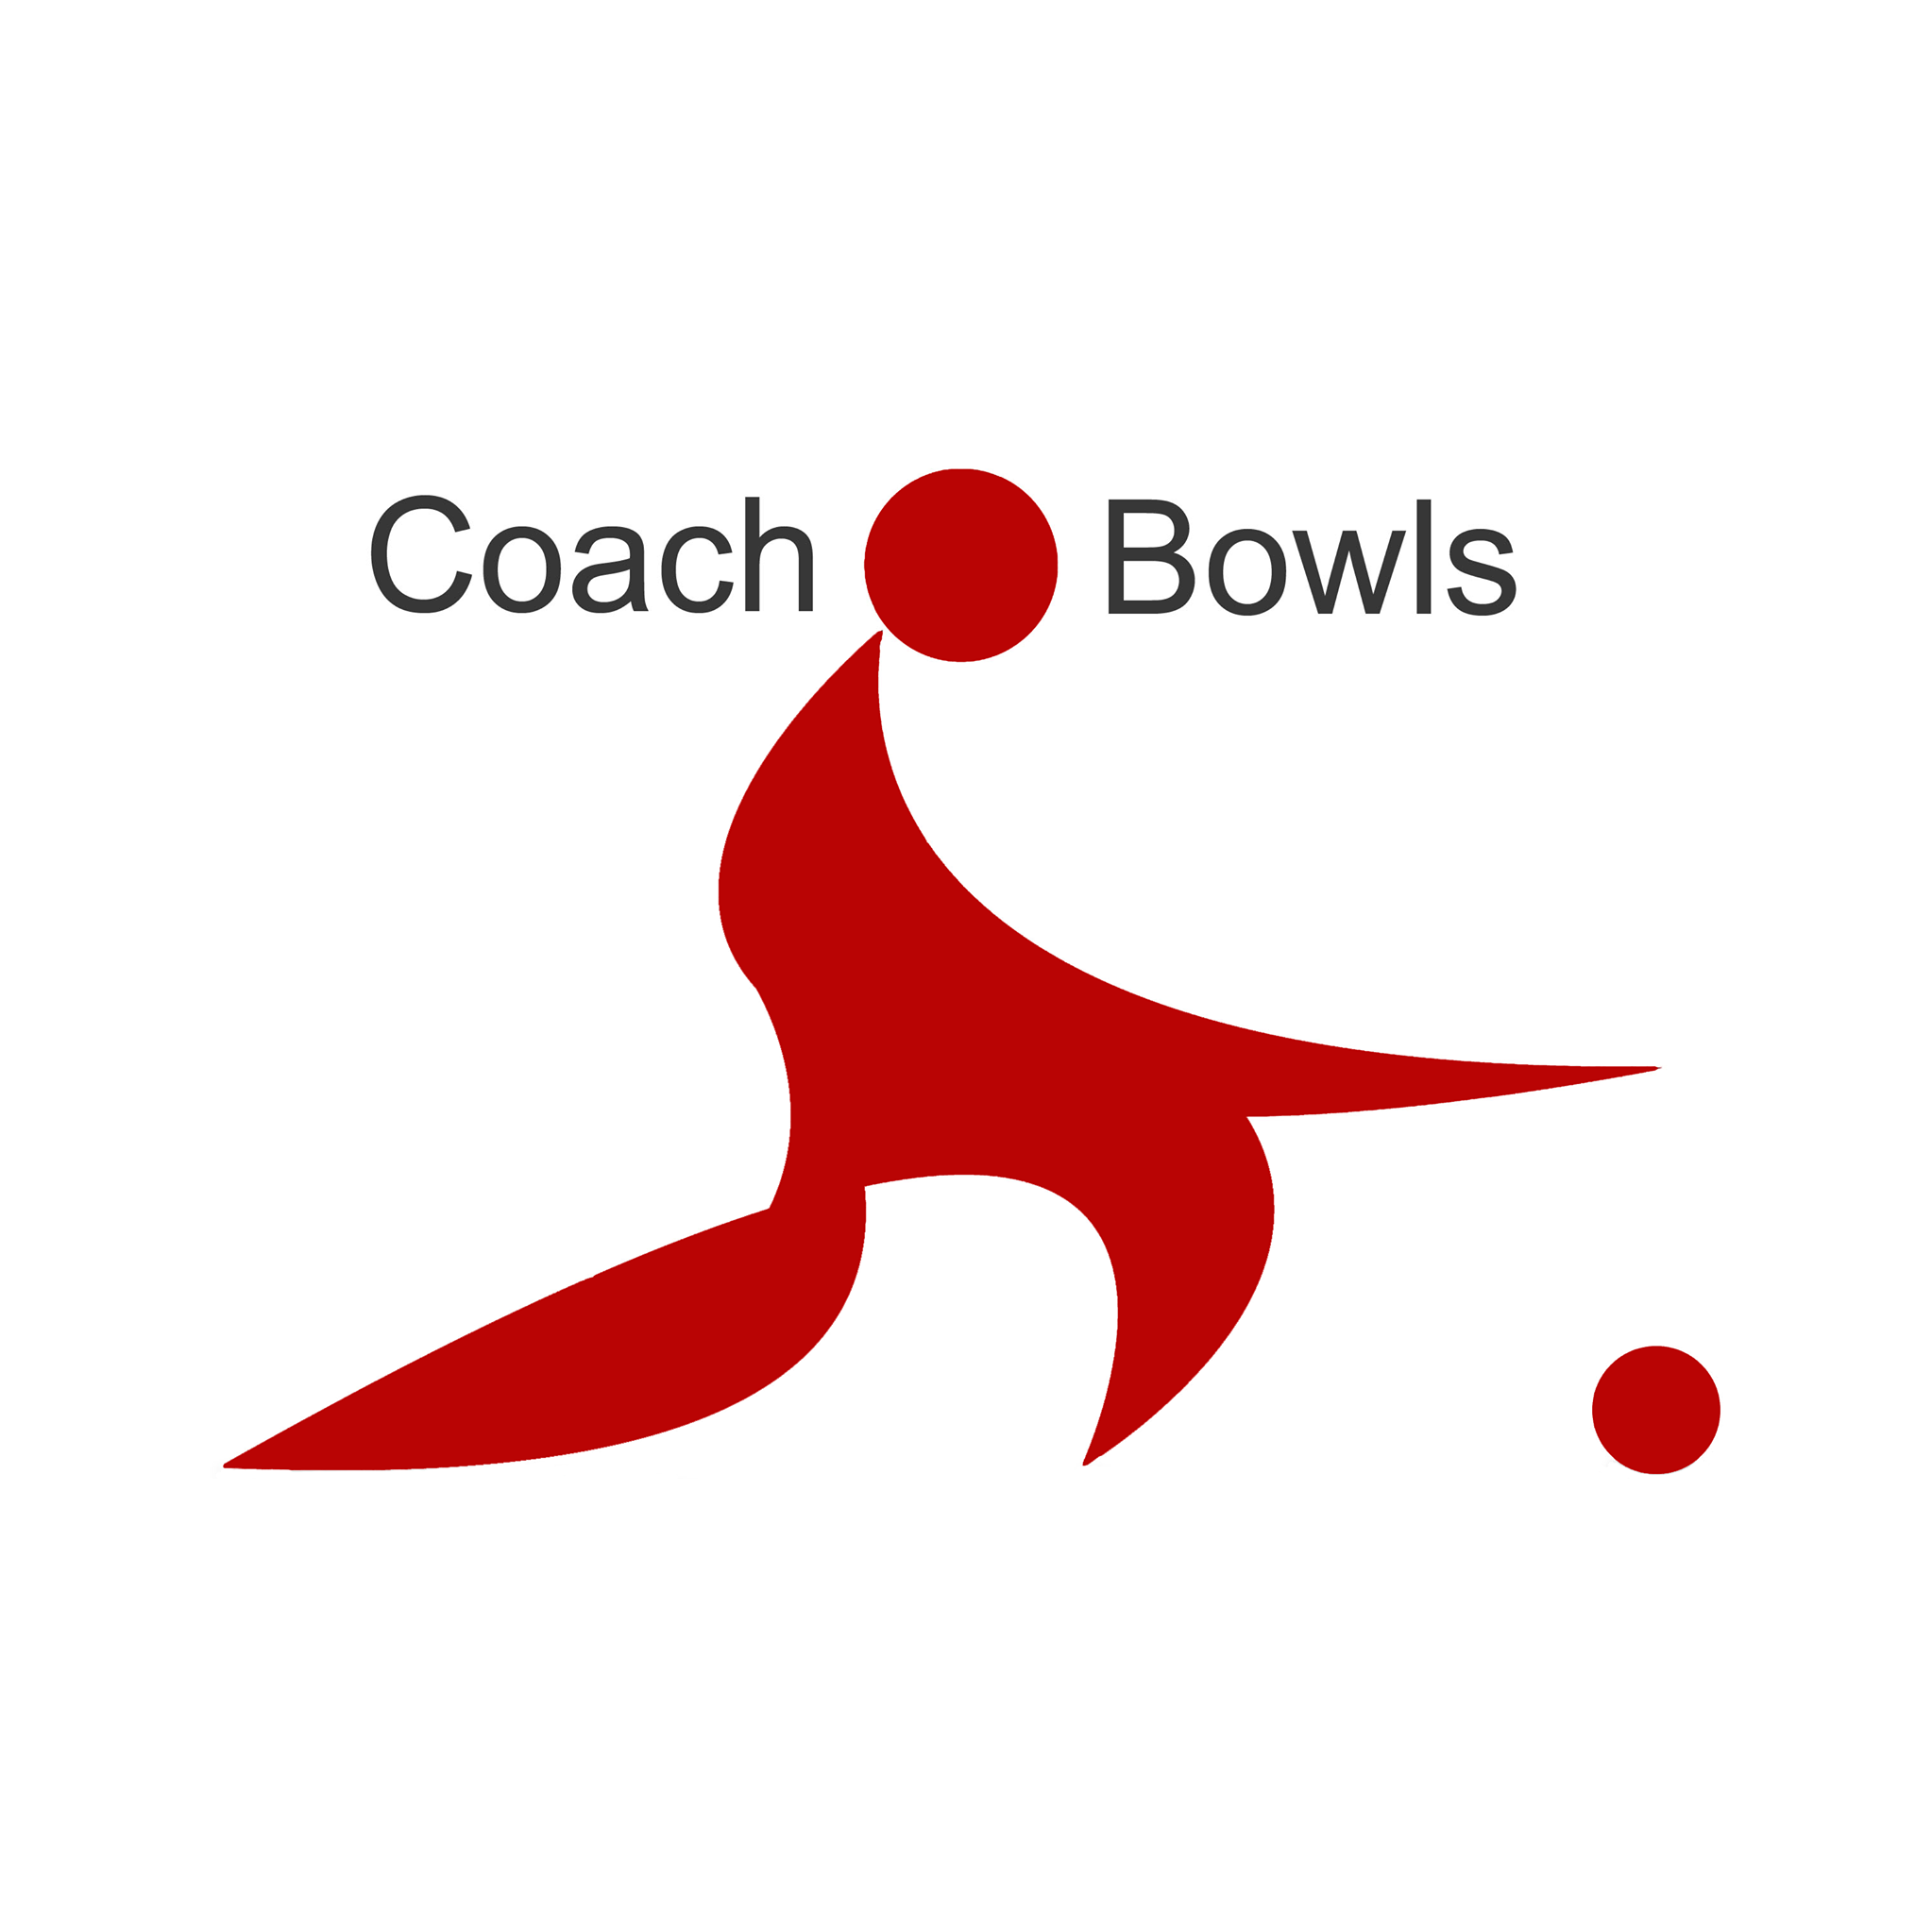 Coach Bowls